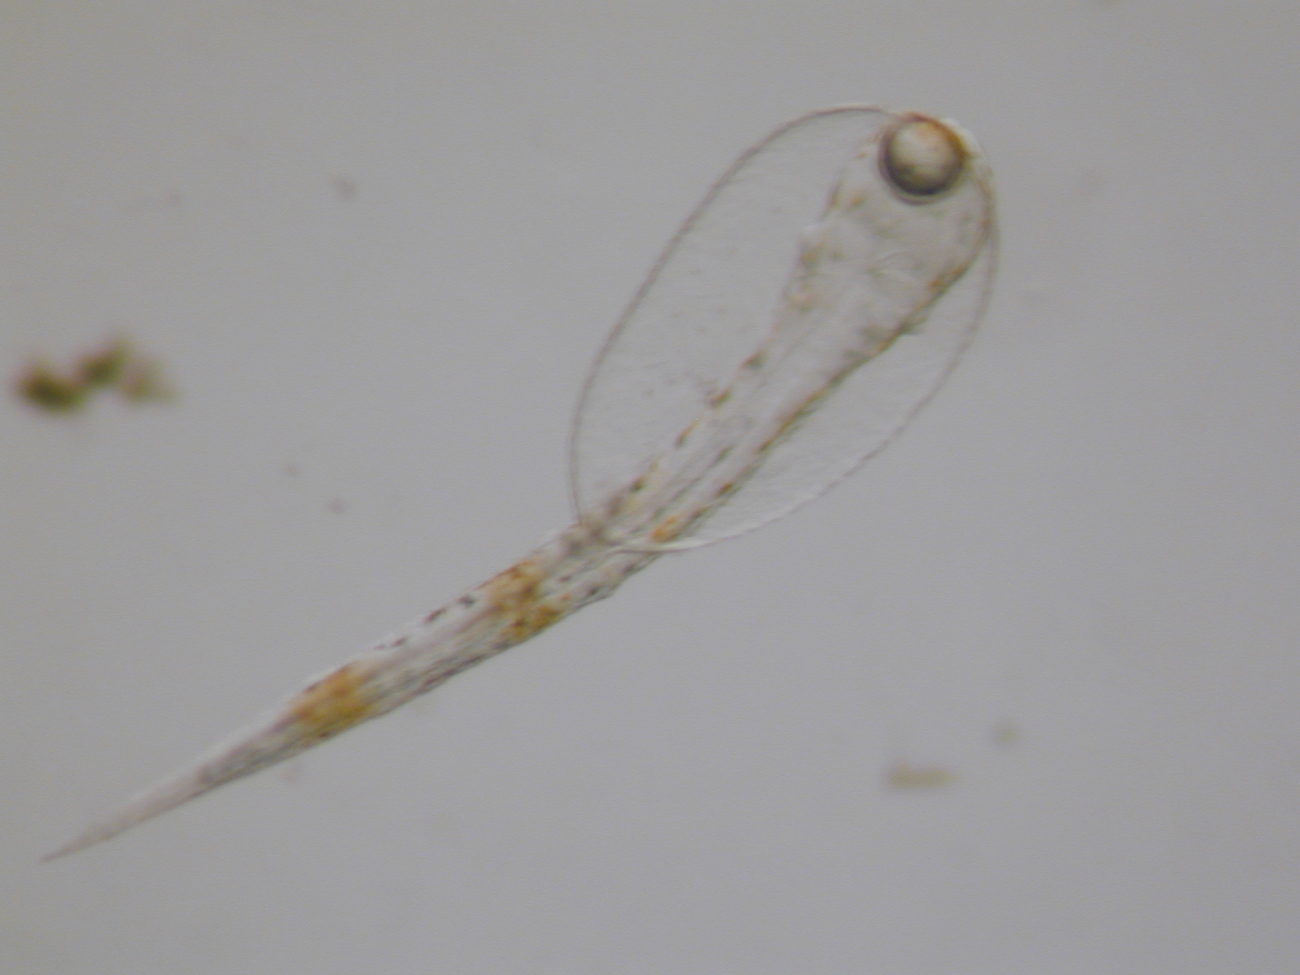 Microscopic view of 4-day-old larval black sea bass (Centropristis striata)